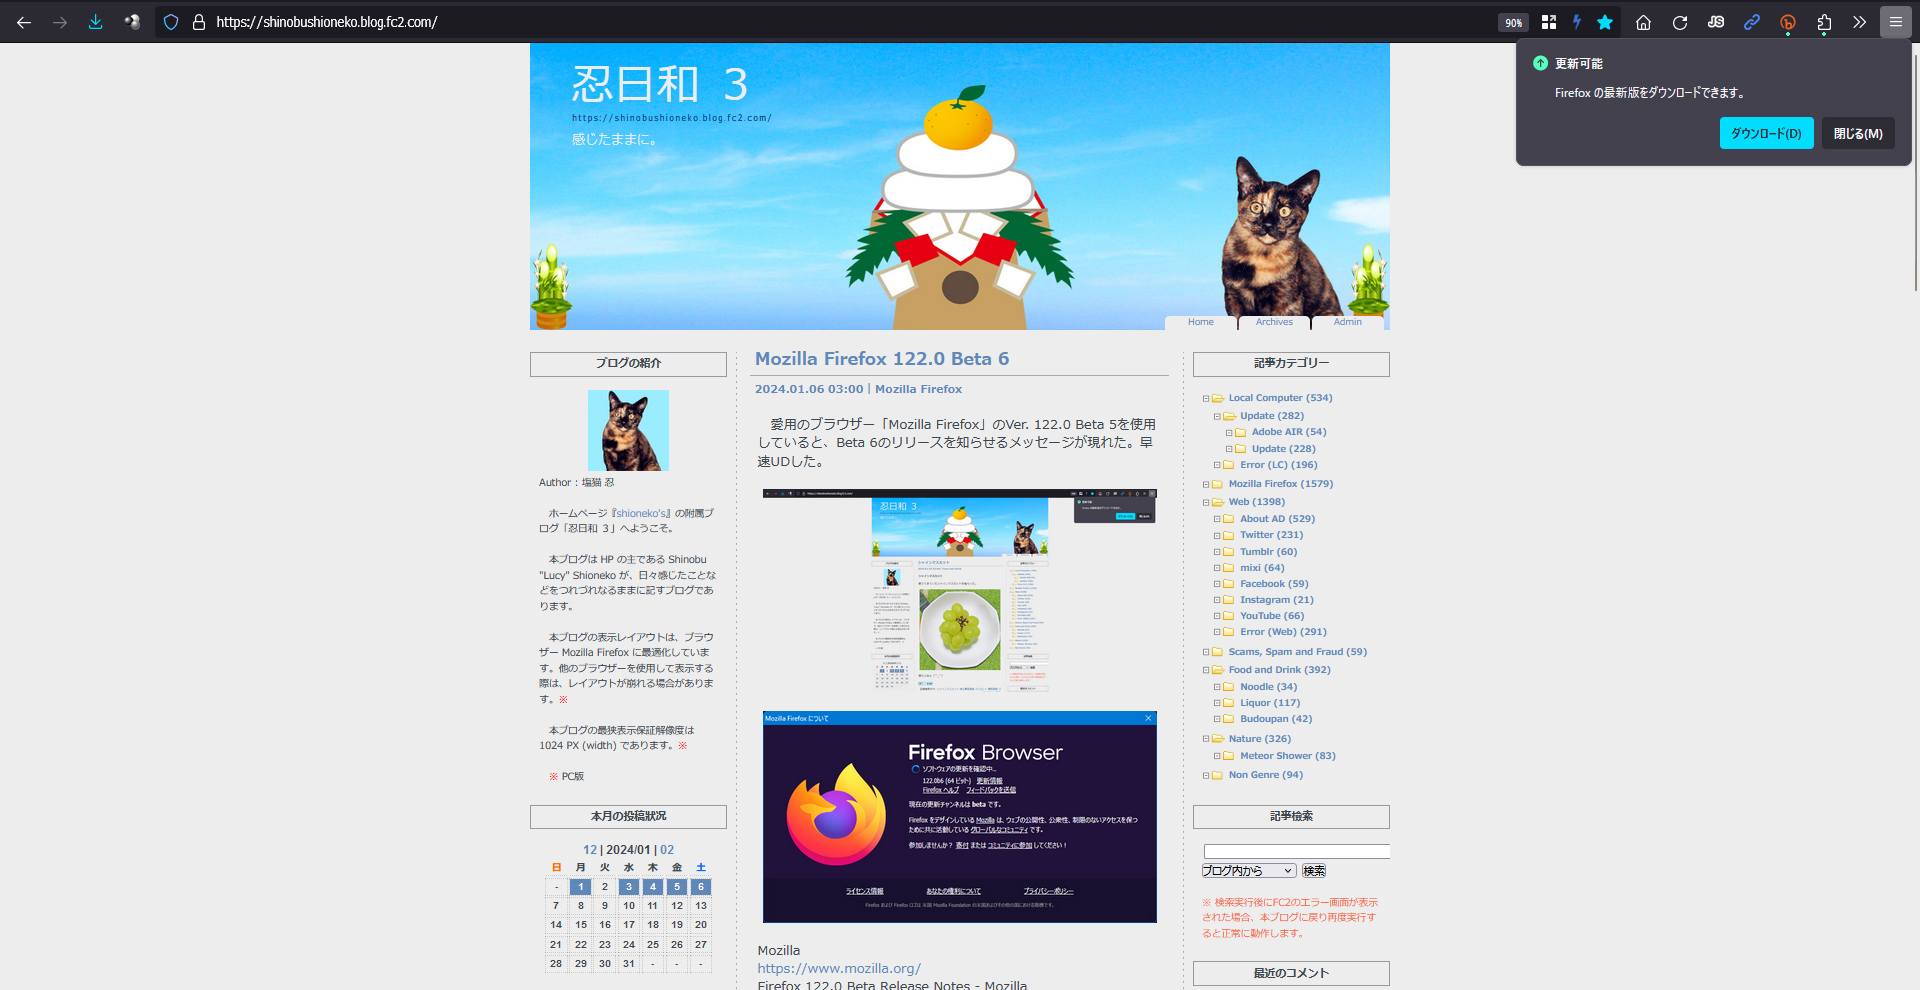 Mozilla Firefox 122.0 Beta 7